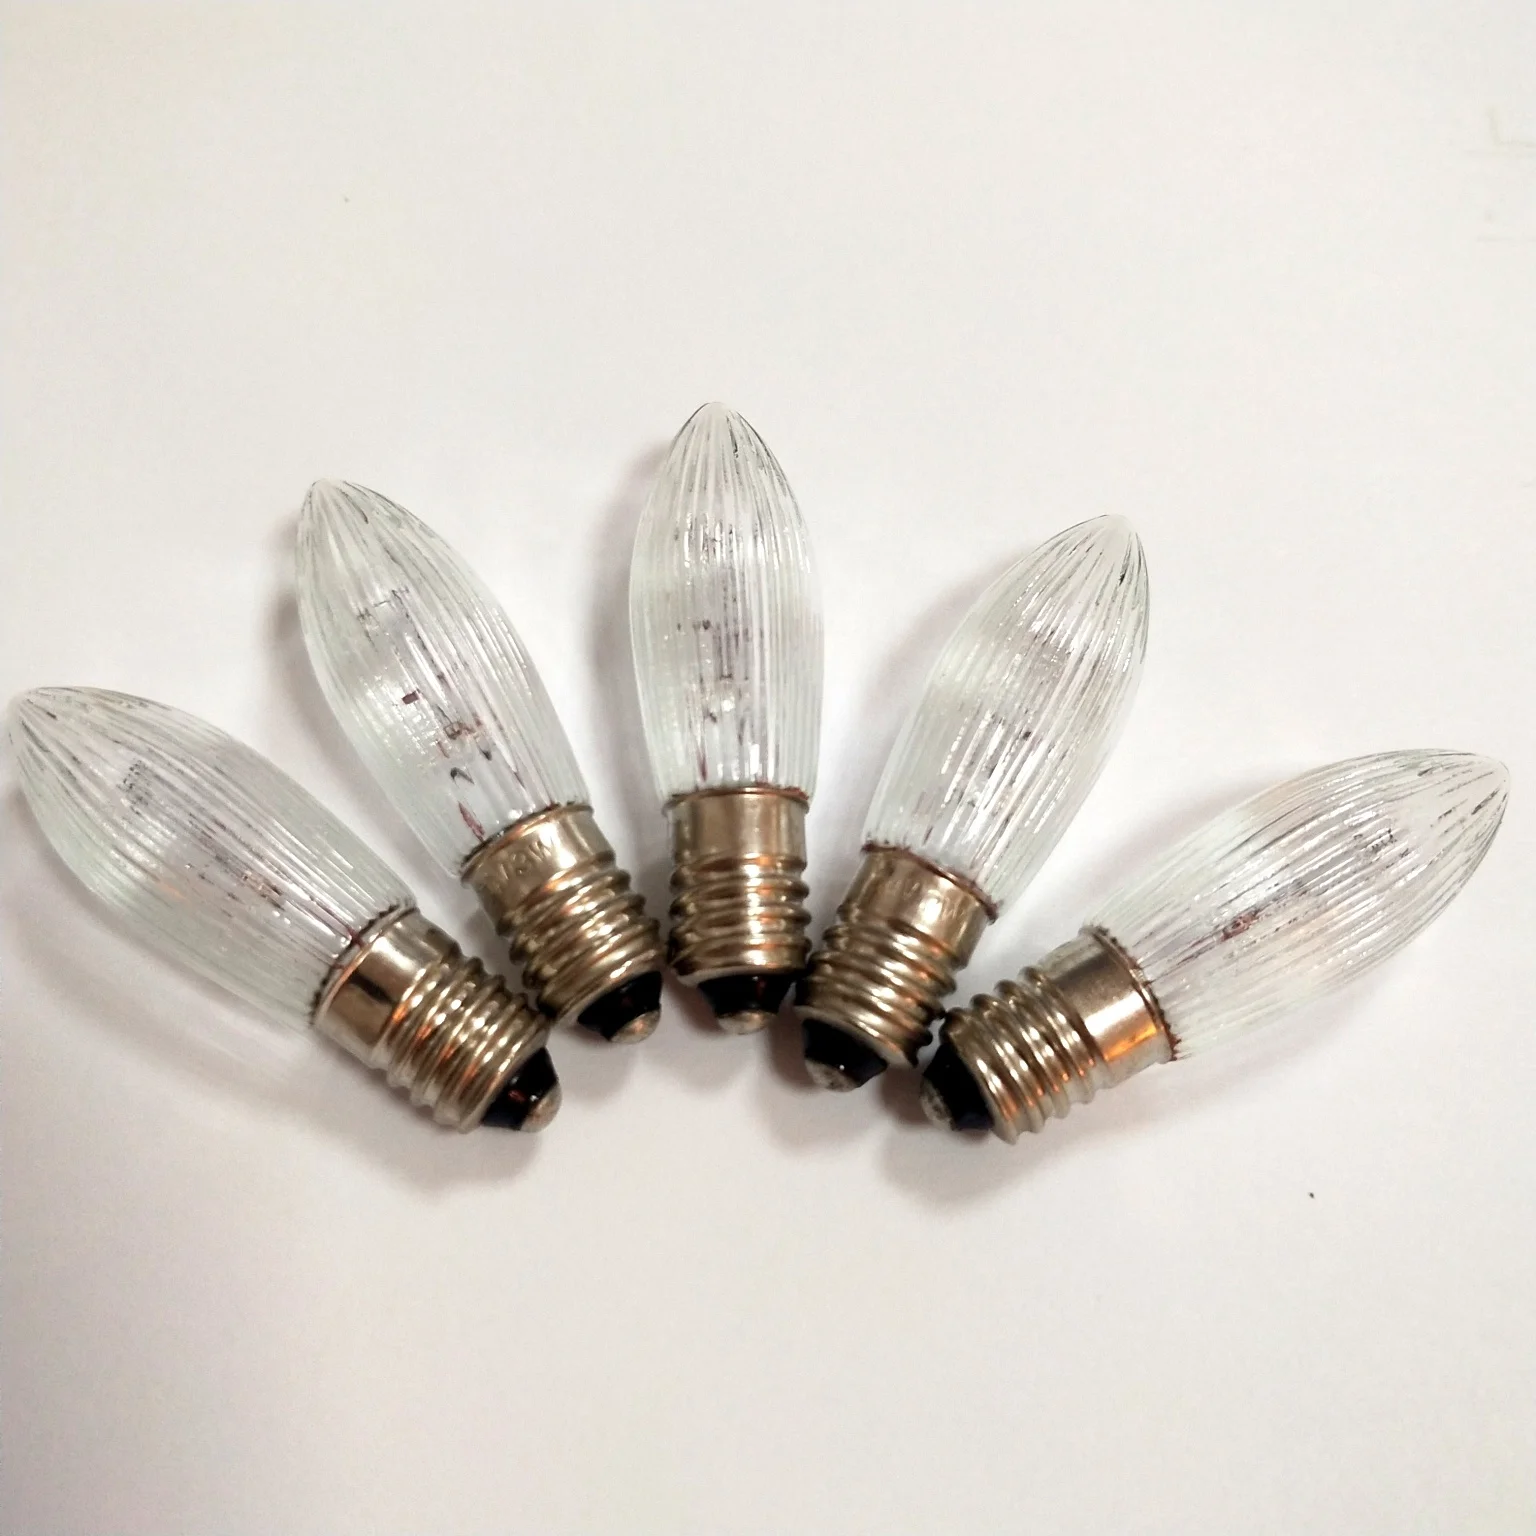 C6 e10 olive shaped candle bridge bulb 8V, 12V, 34V, 55V0.2W Christmas tree string lights replacement bulb